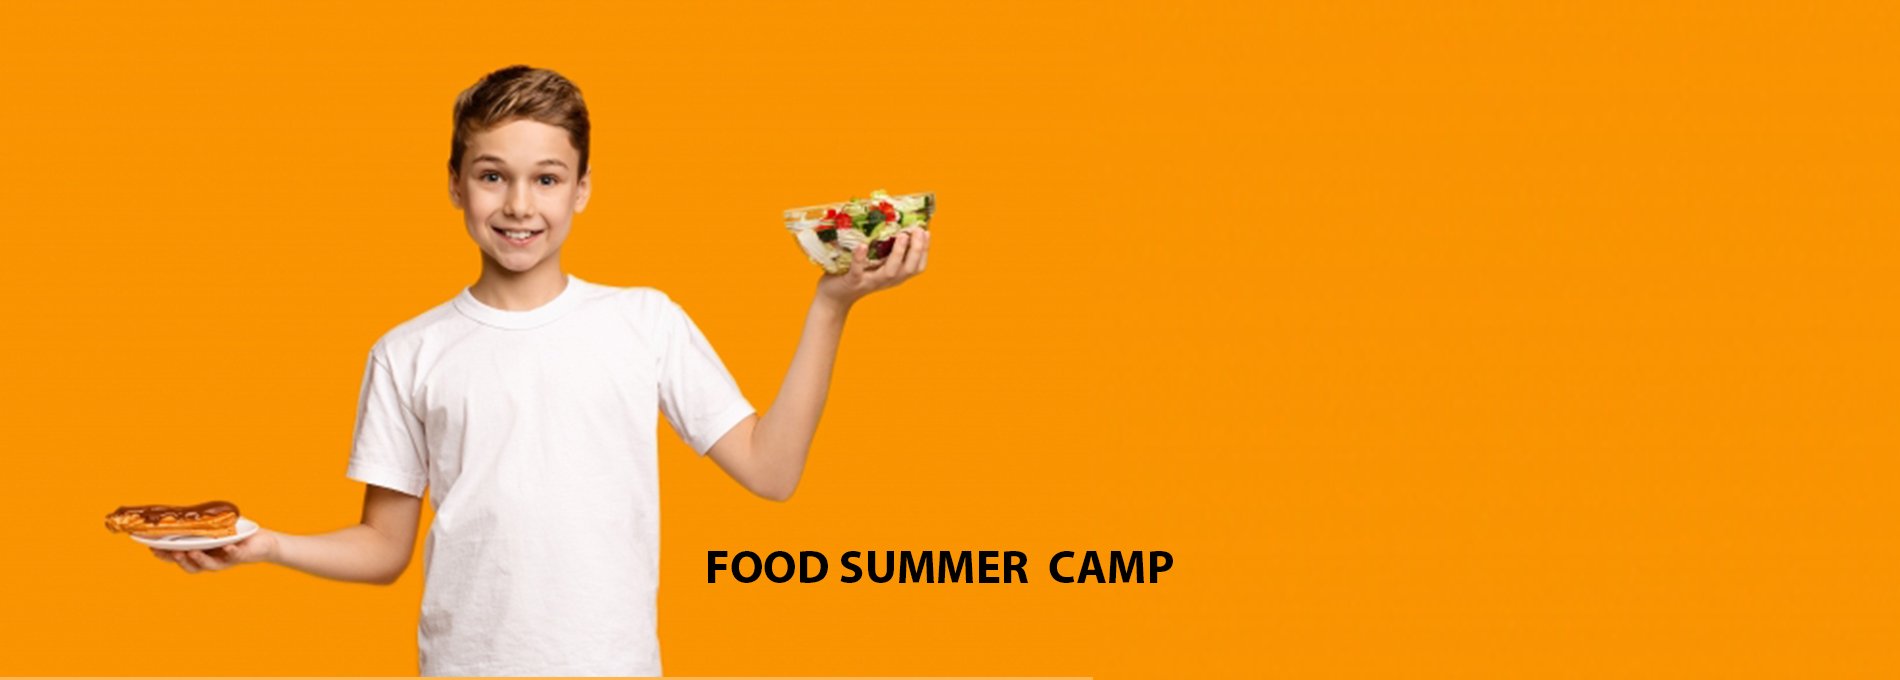 Food Summer Camp